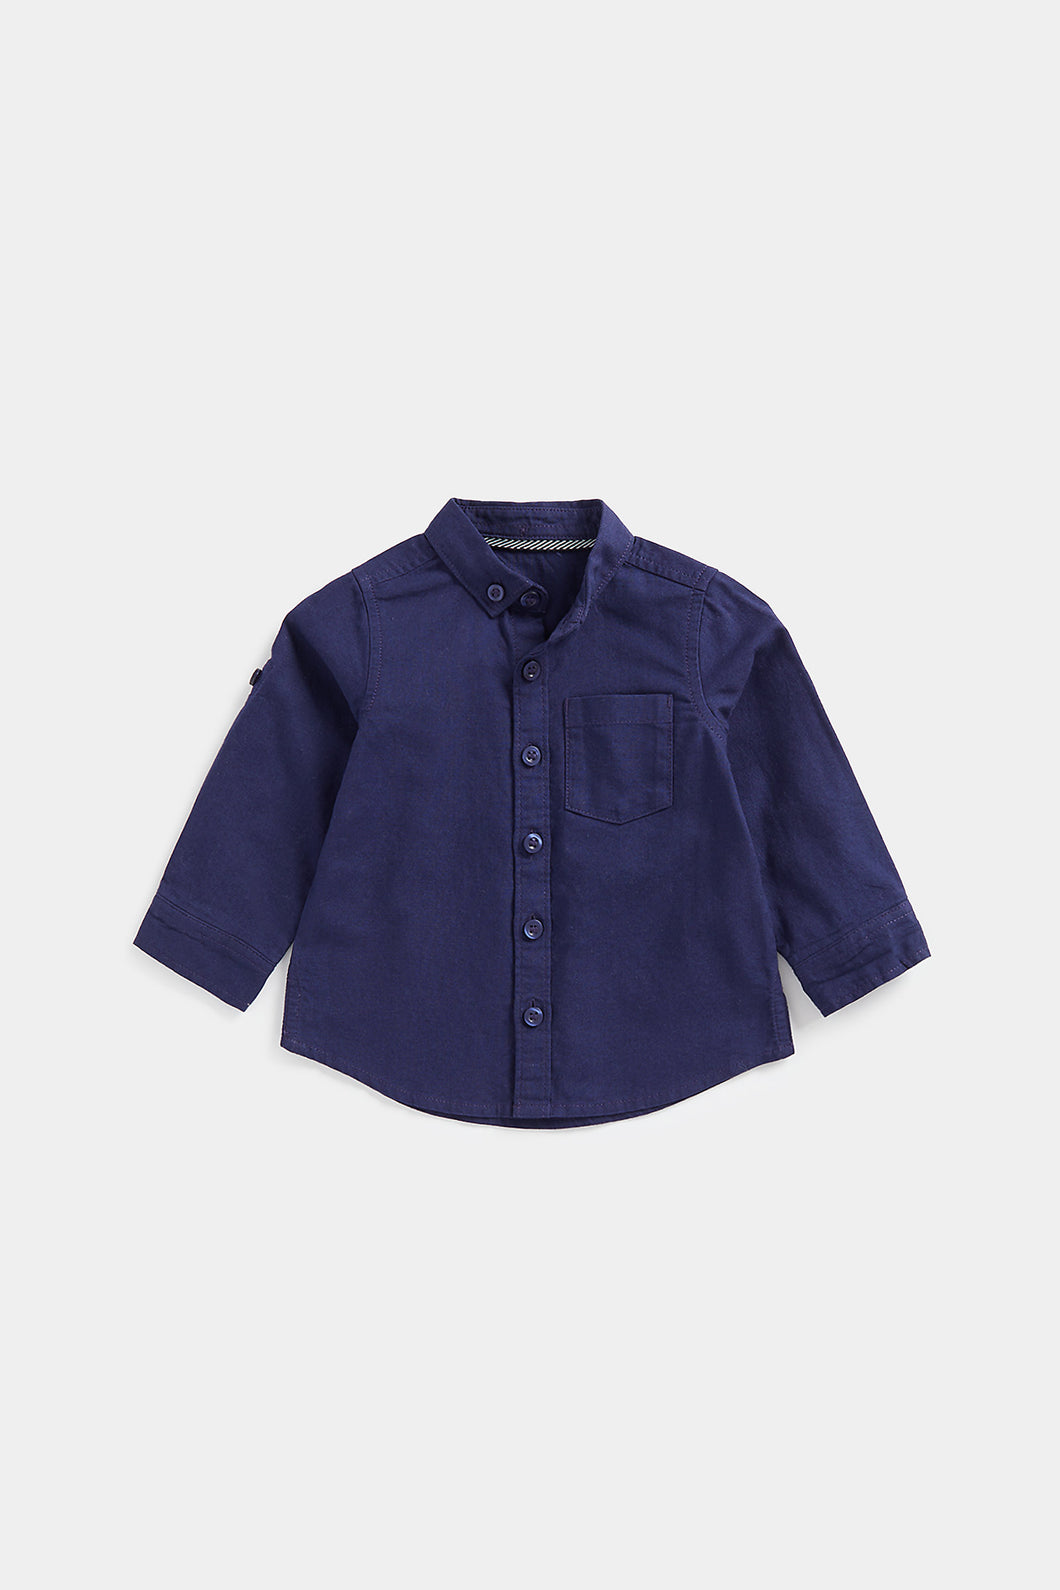 Mothercare Navy Cotton Shirt